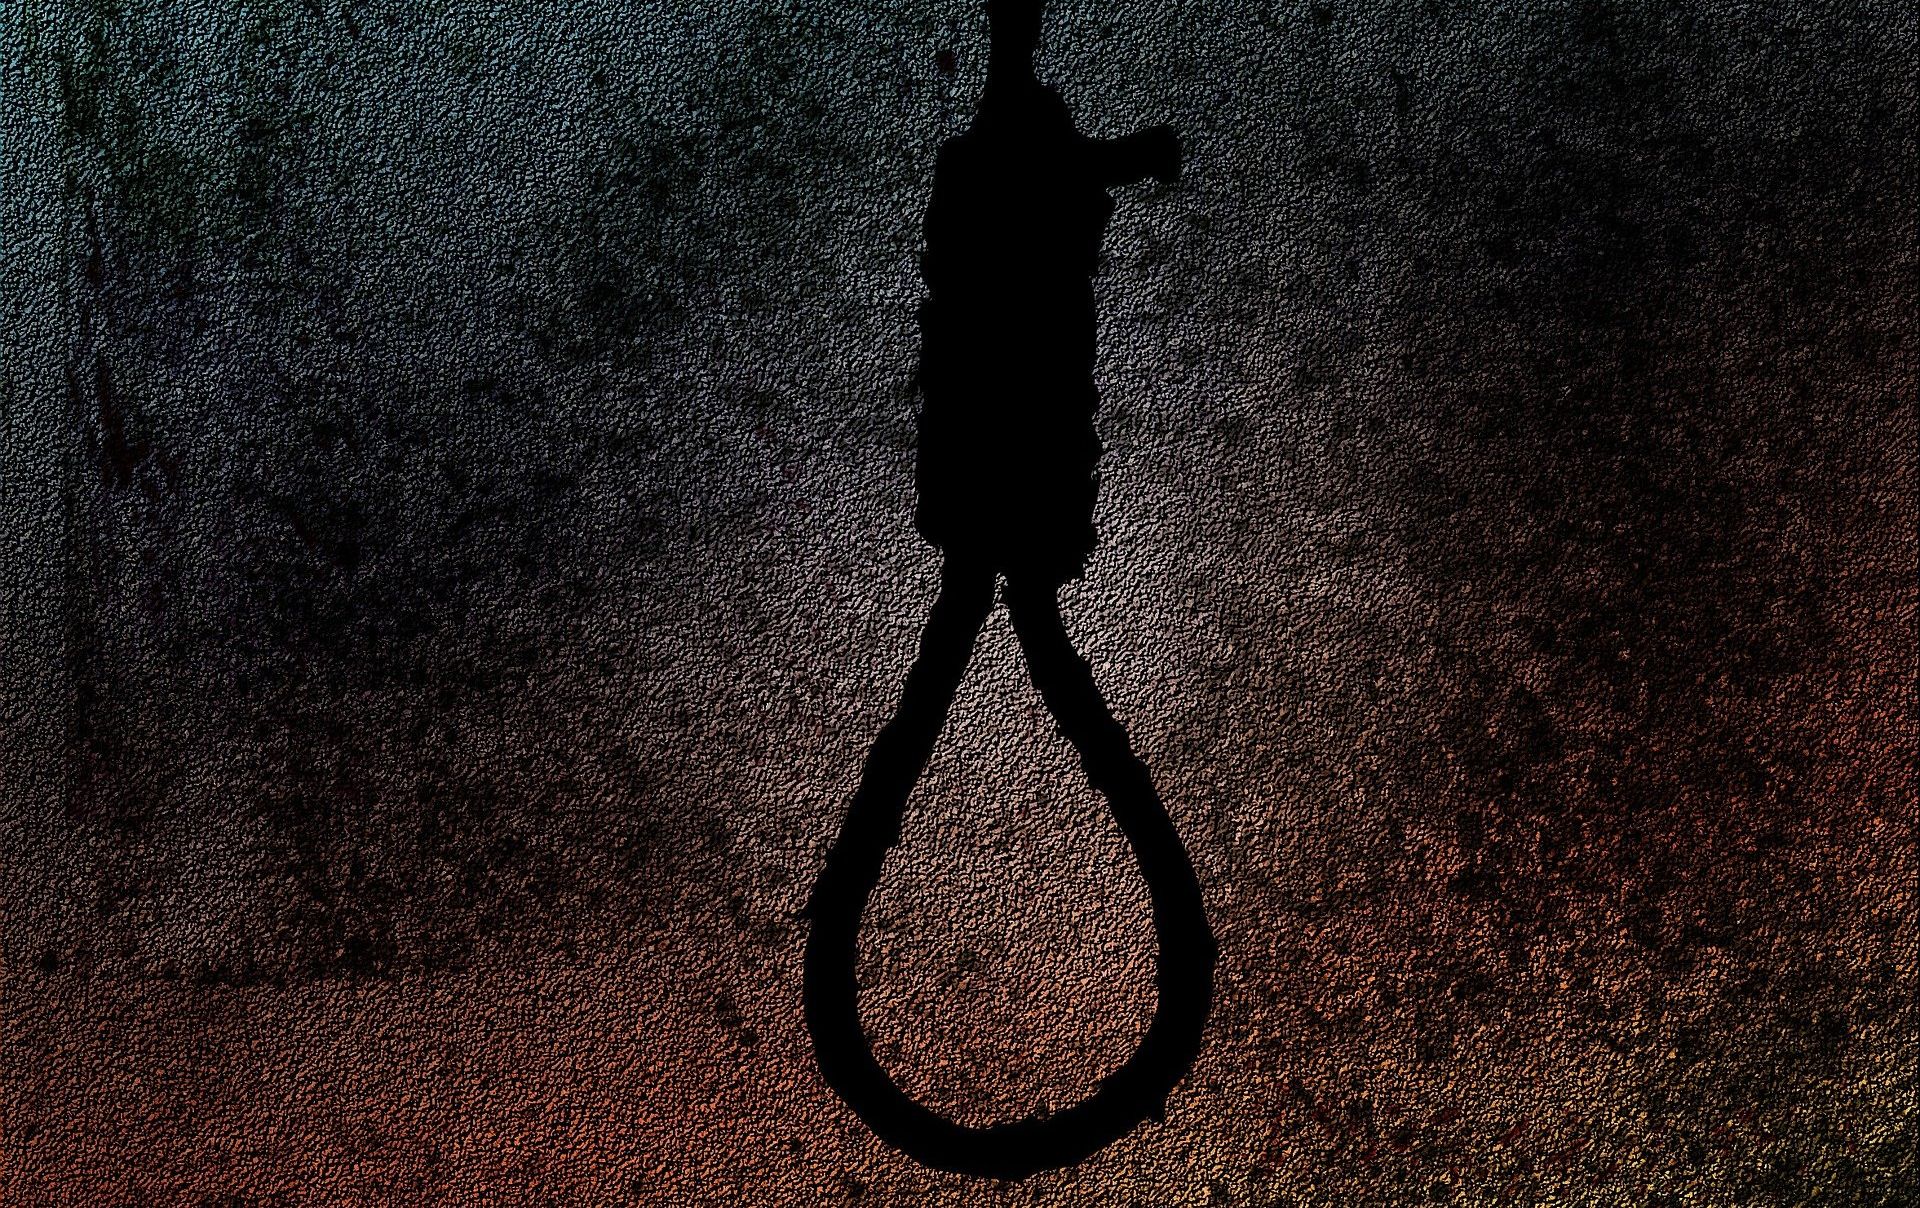 Suicide (Representative image)